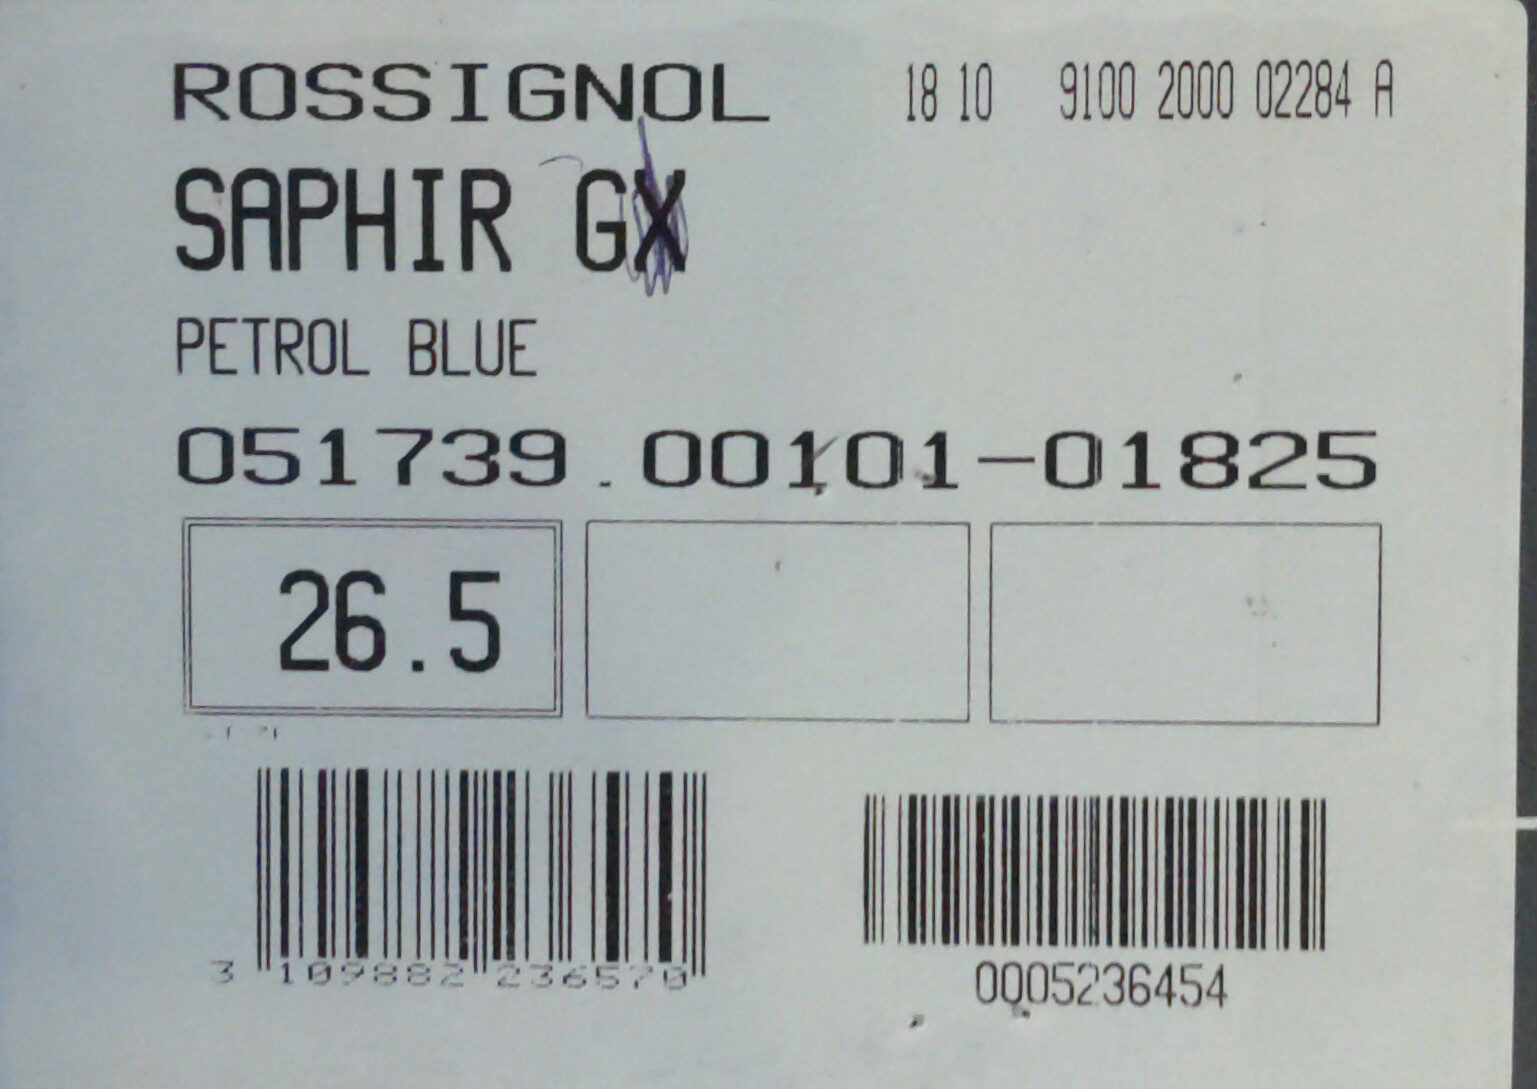 Saphir GX bleu pétrole - Product - en